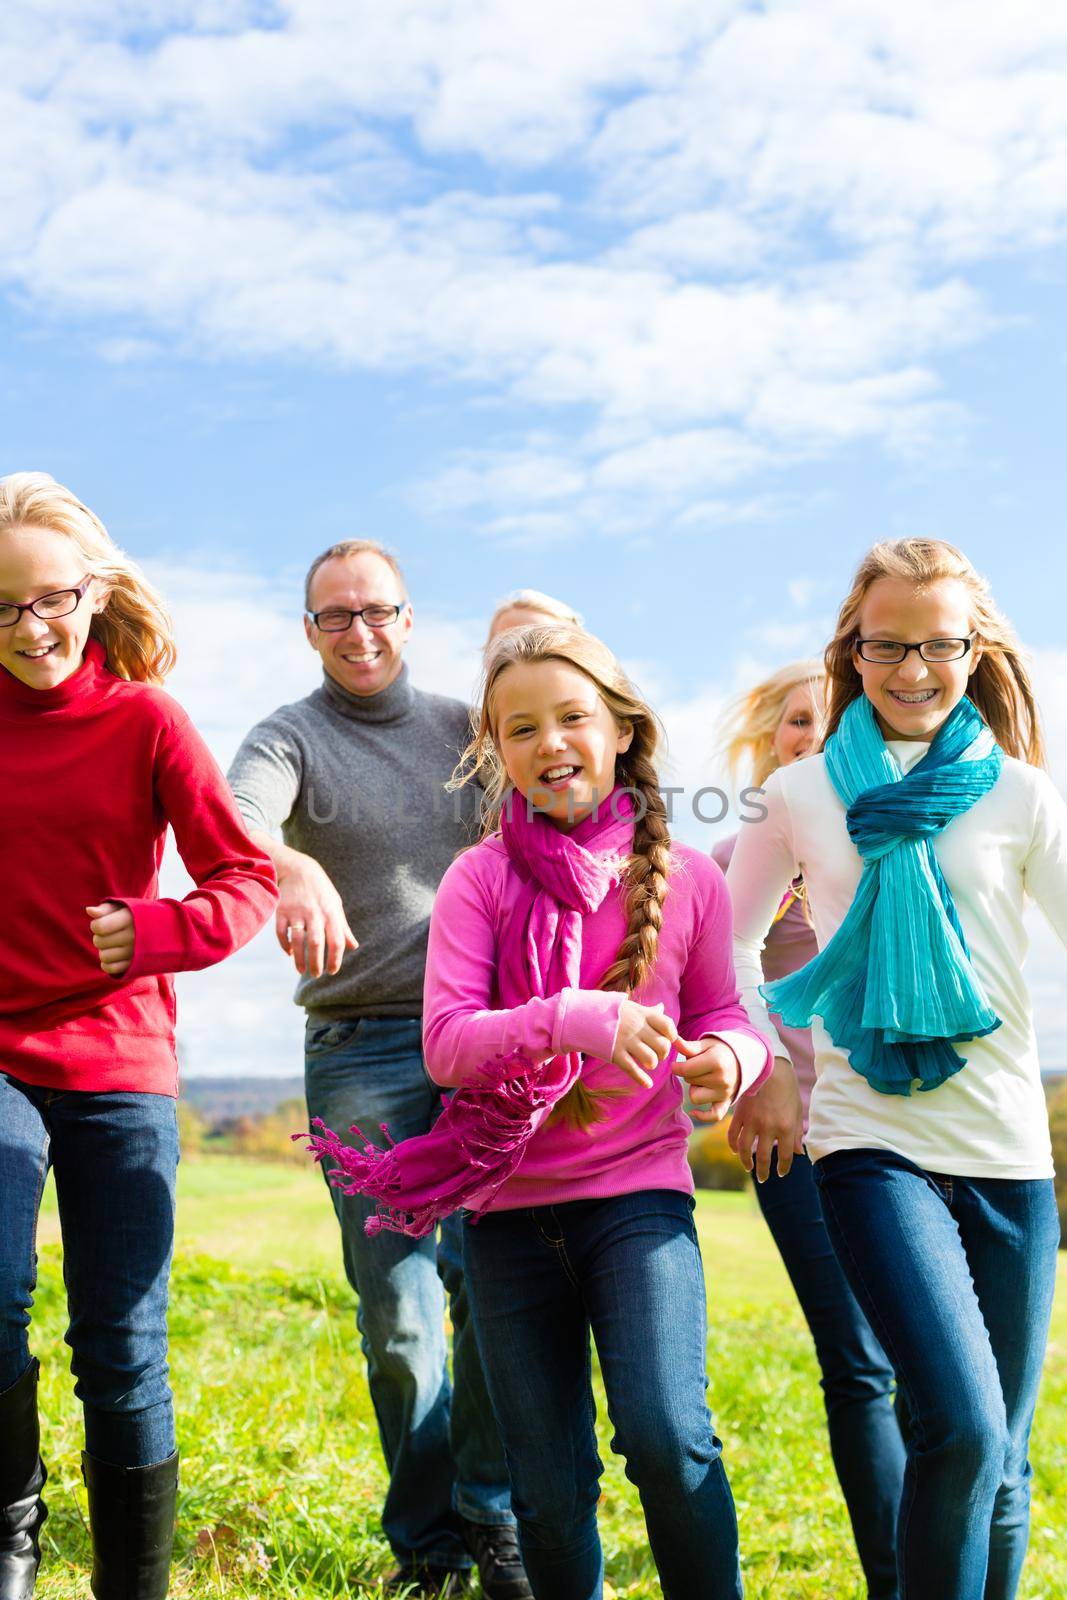 Family running through park in fall or autumn by Kzenon